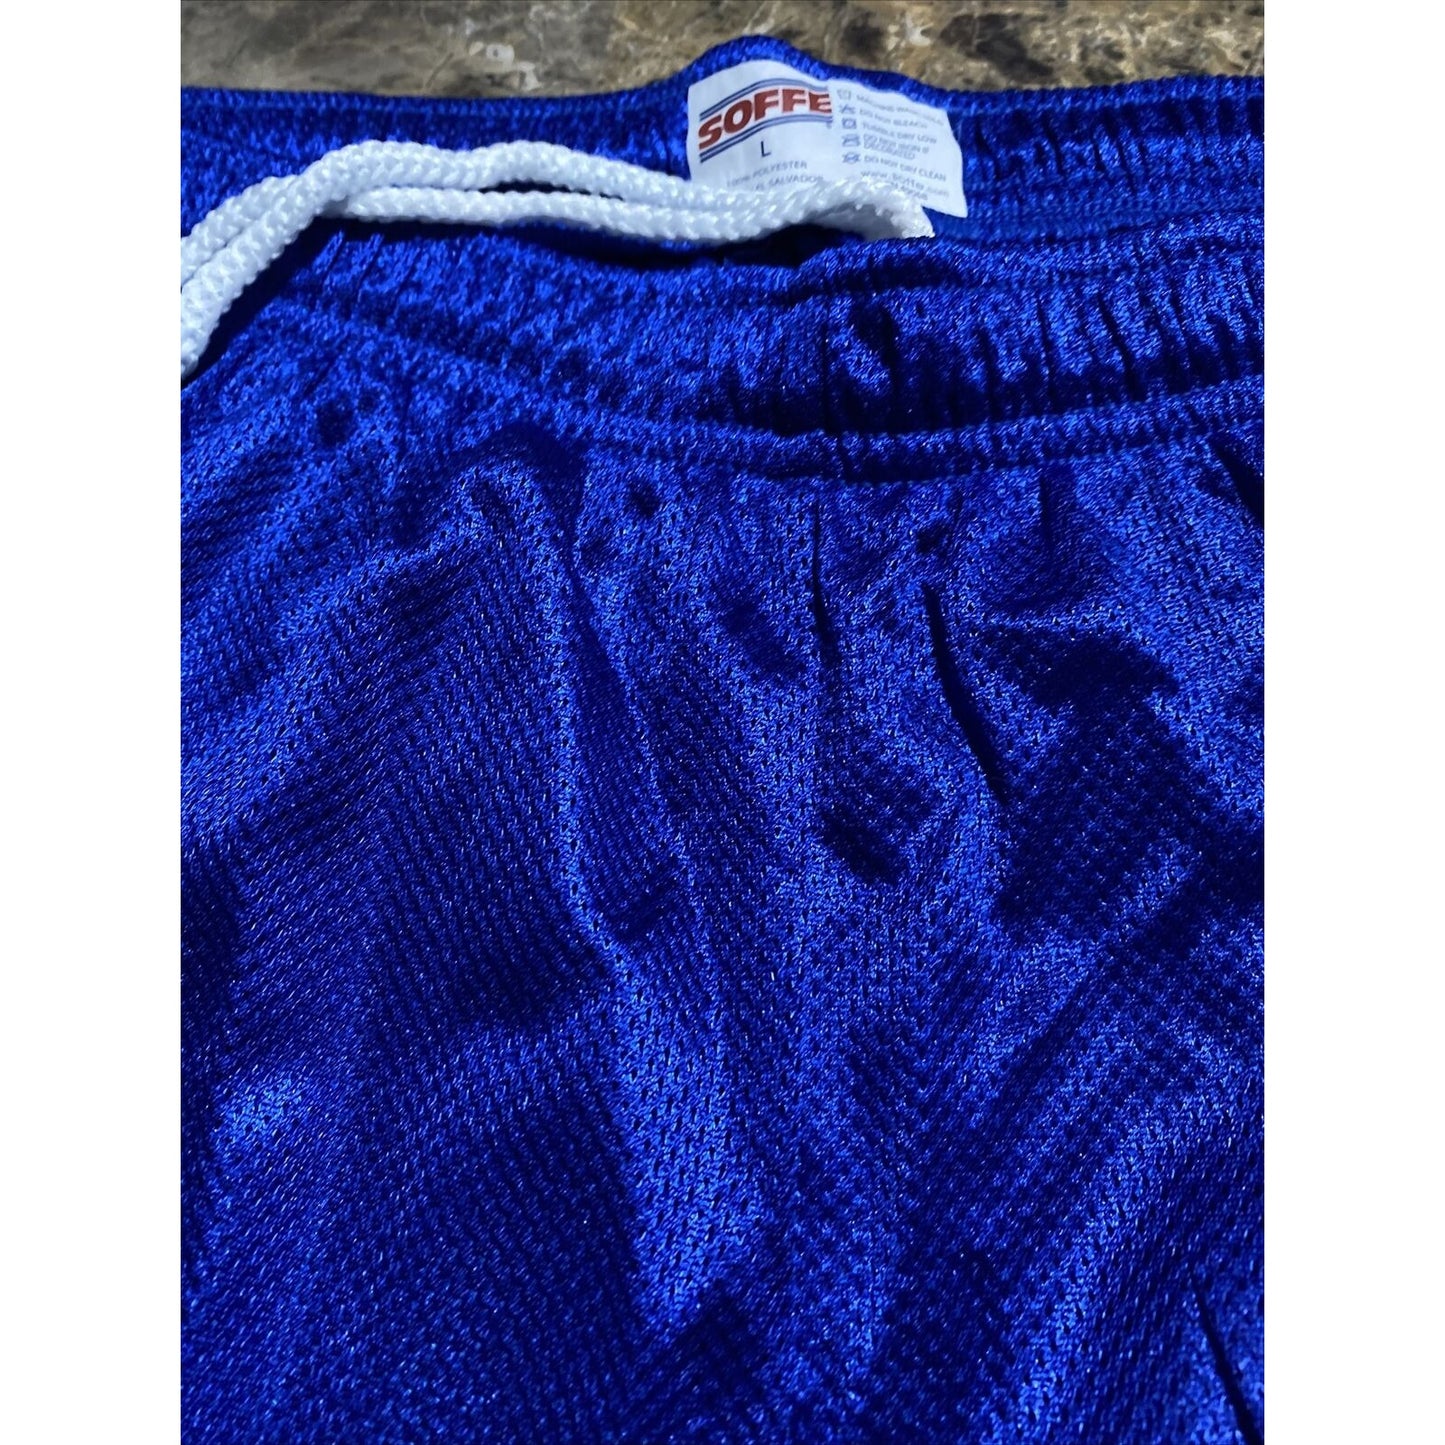 Soffe Men’s Large Royal Blue Basketball Training Polyester Mesh Shorts